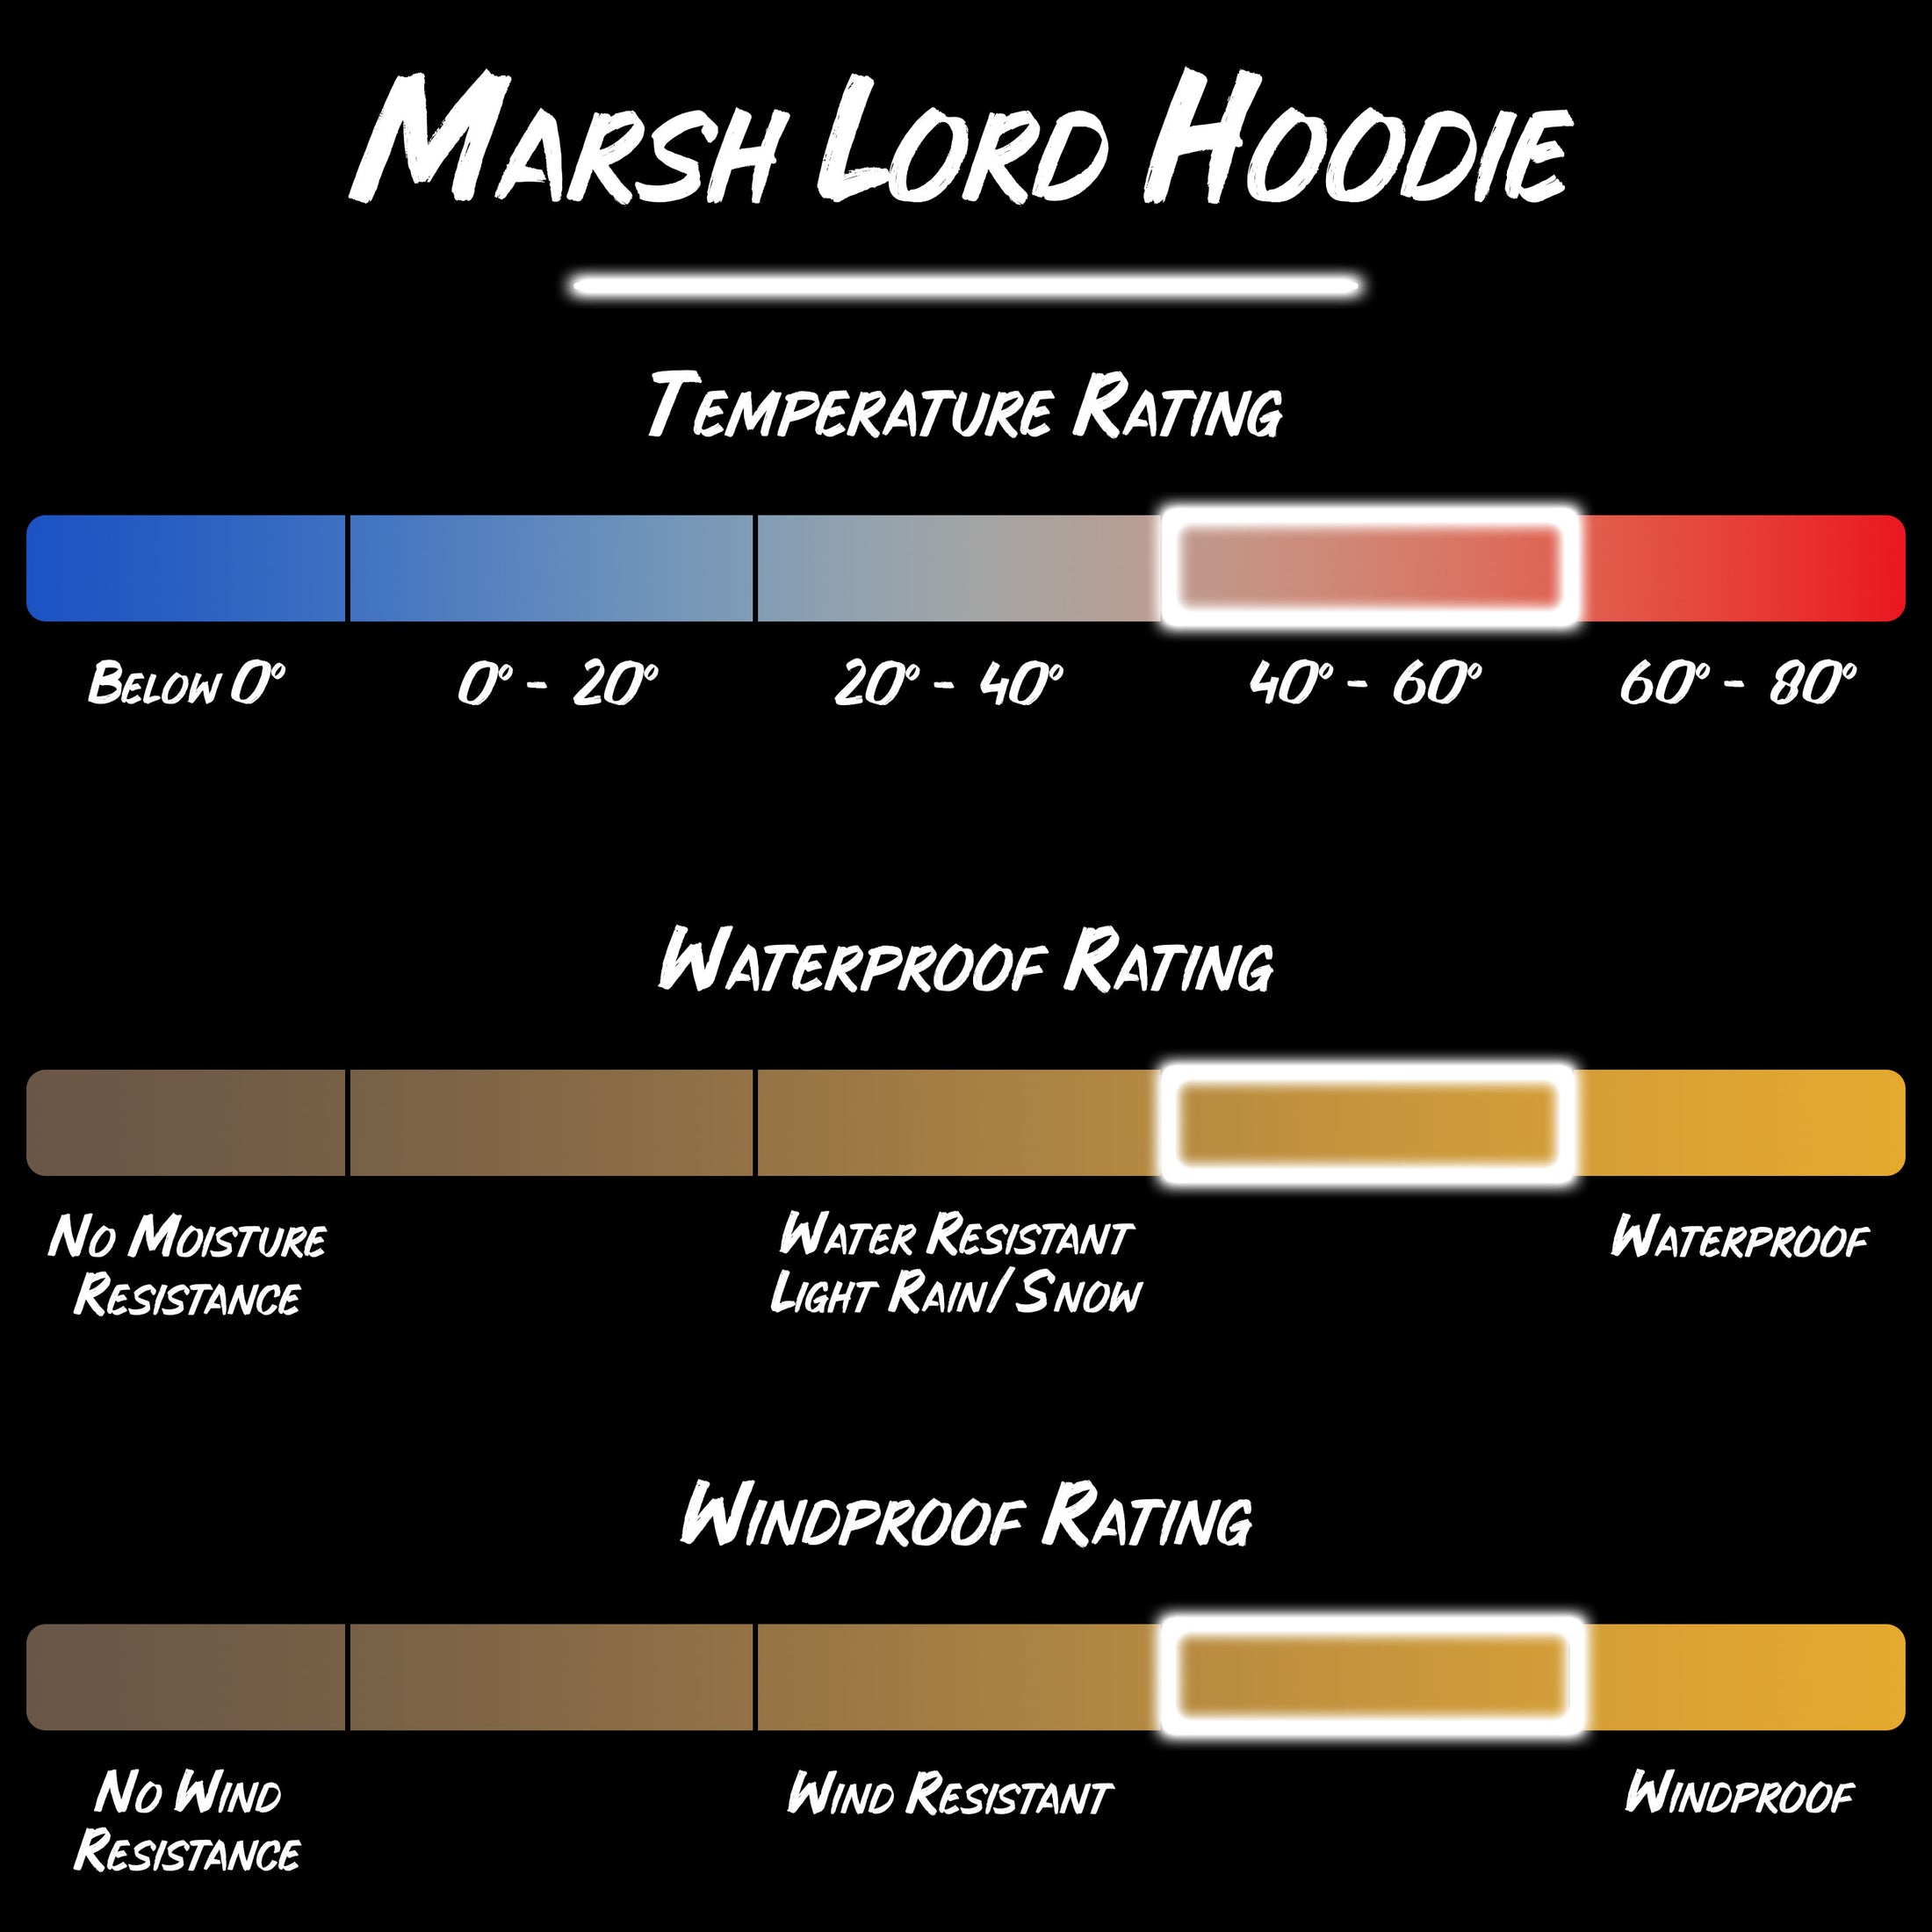 Gamehide marsh lord hoodie product specifications.